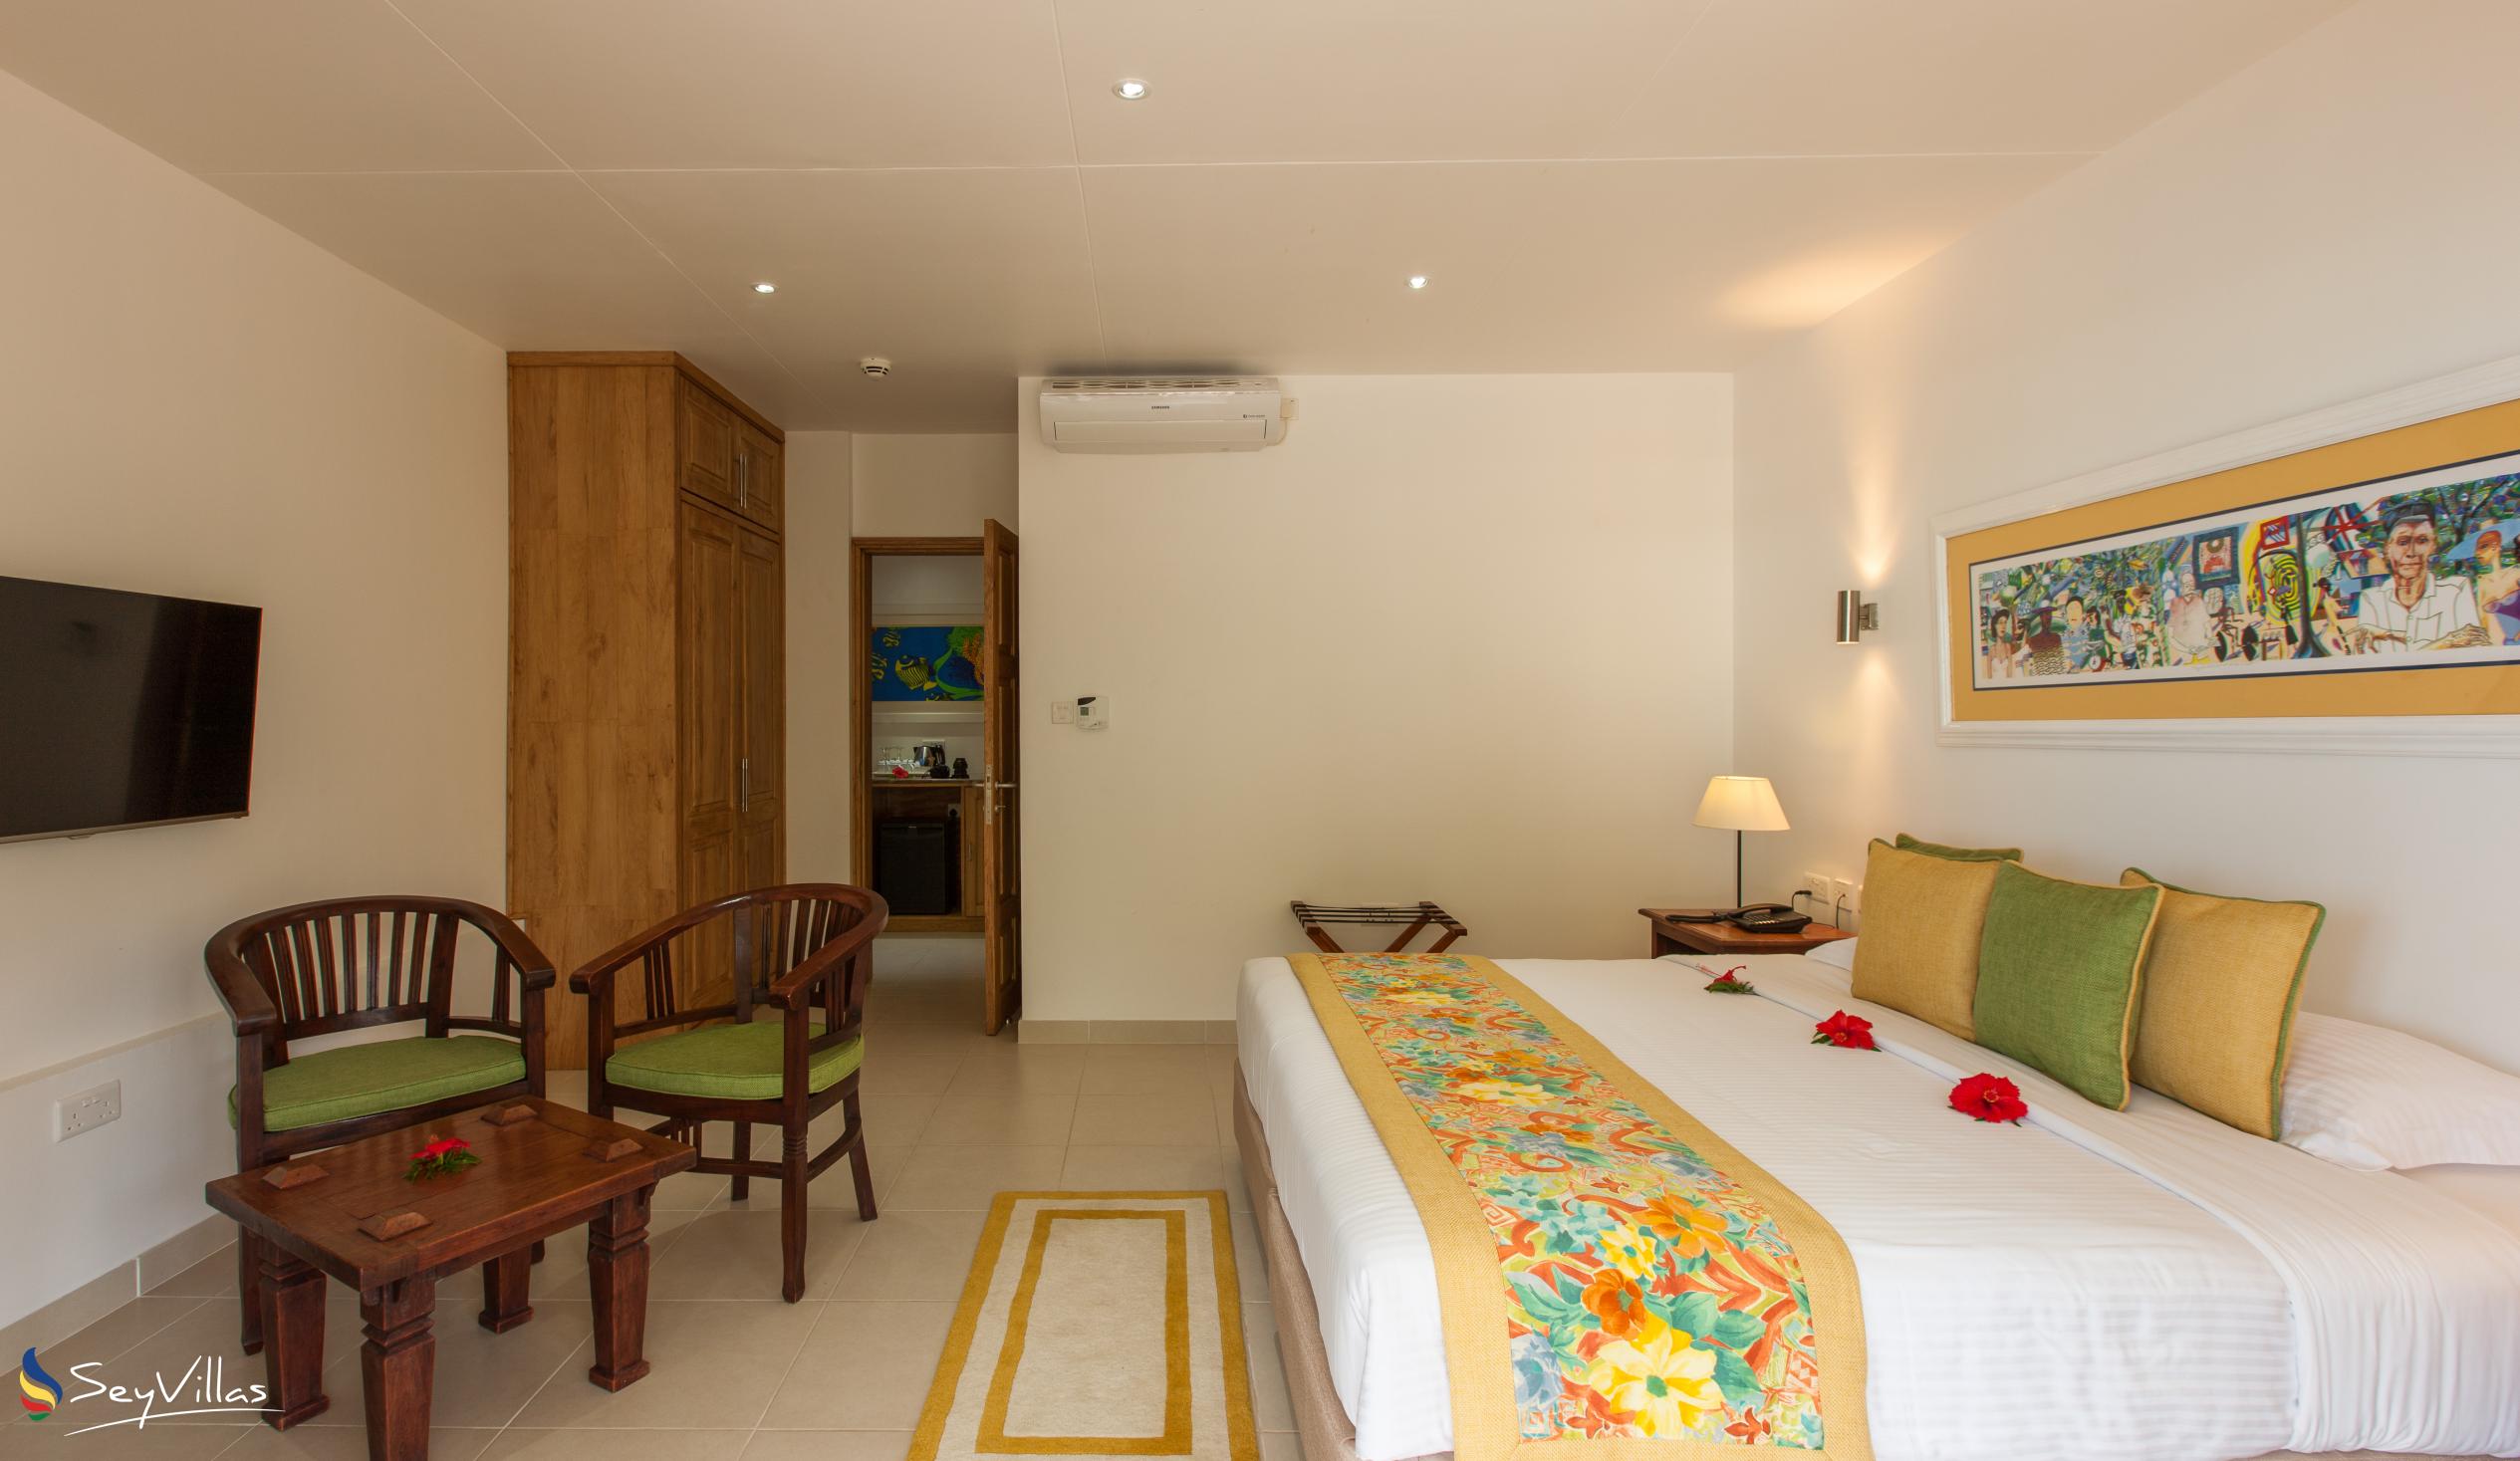 Photo 71: Acajou Beach Resort - Superior Family Room - Praslin (Seychelles)